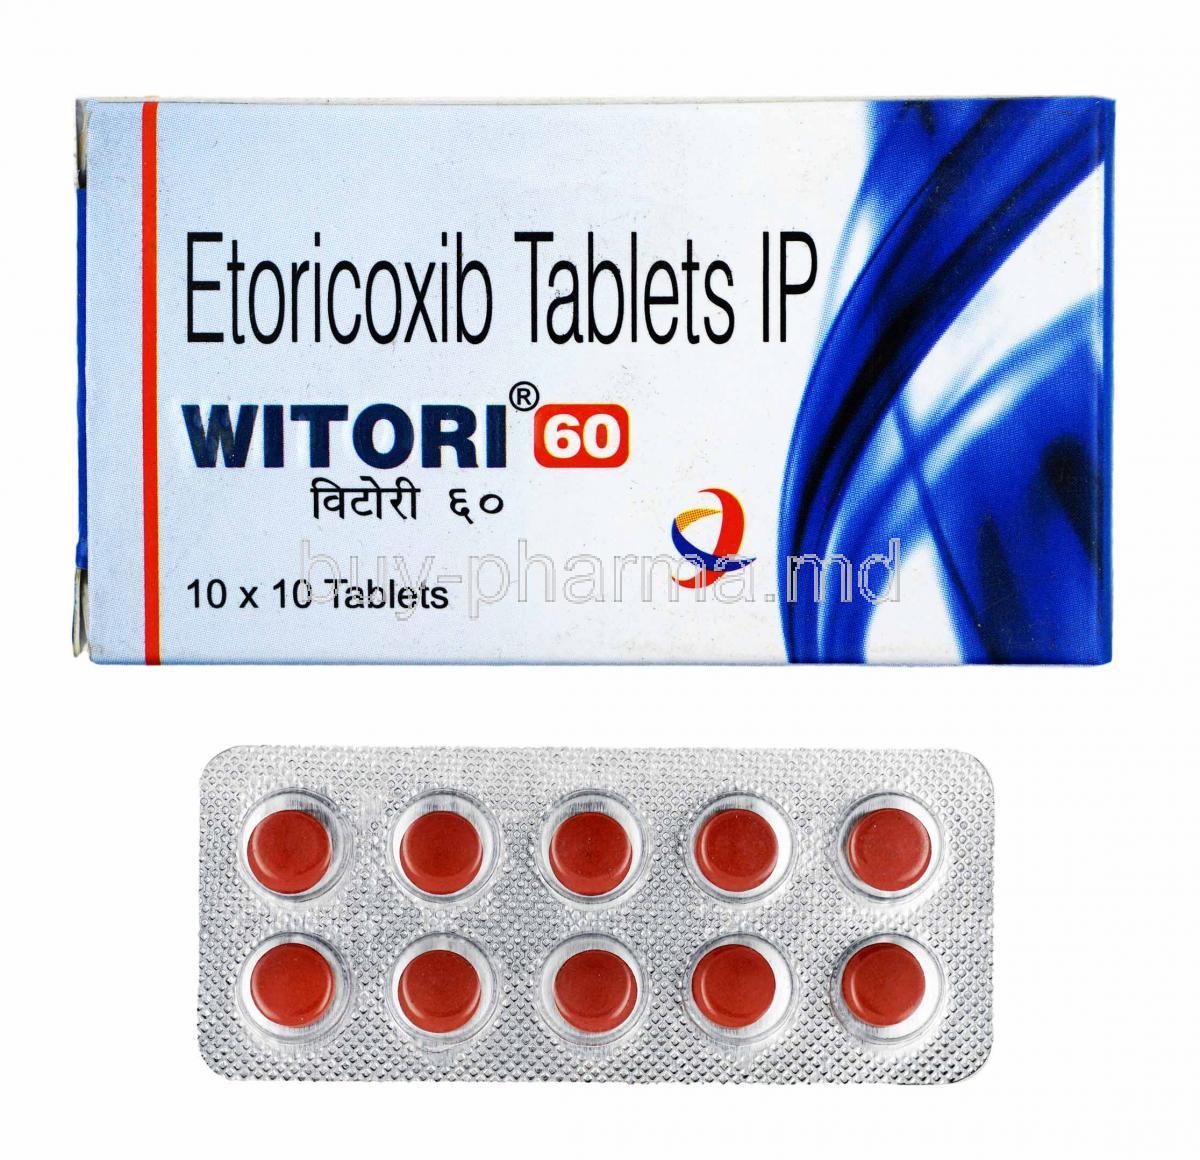 Witori, Etoricoxib 60mg box and tablets